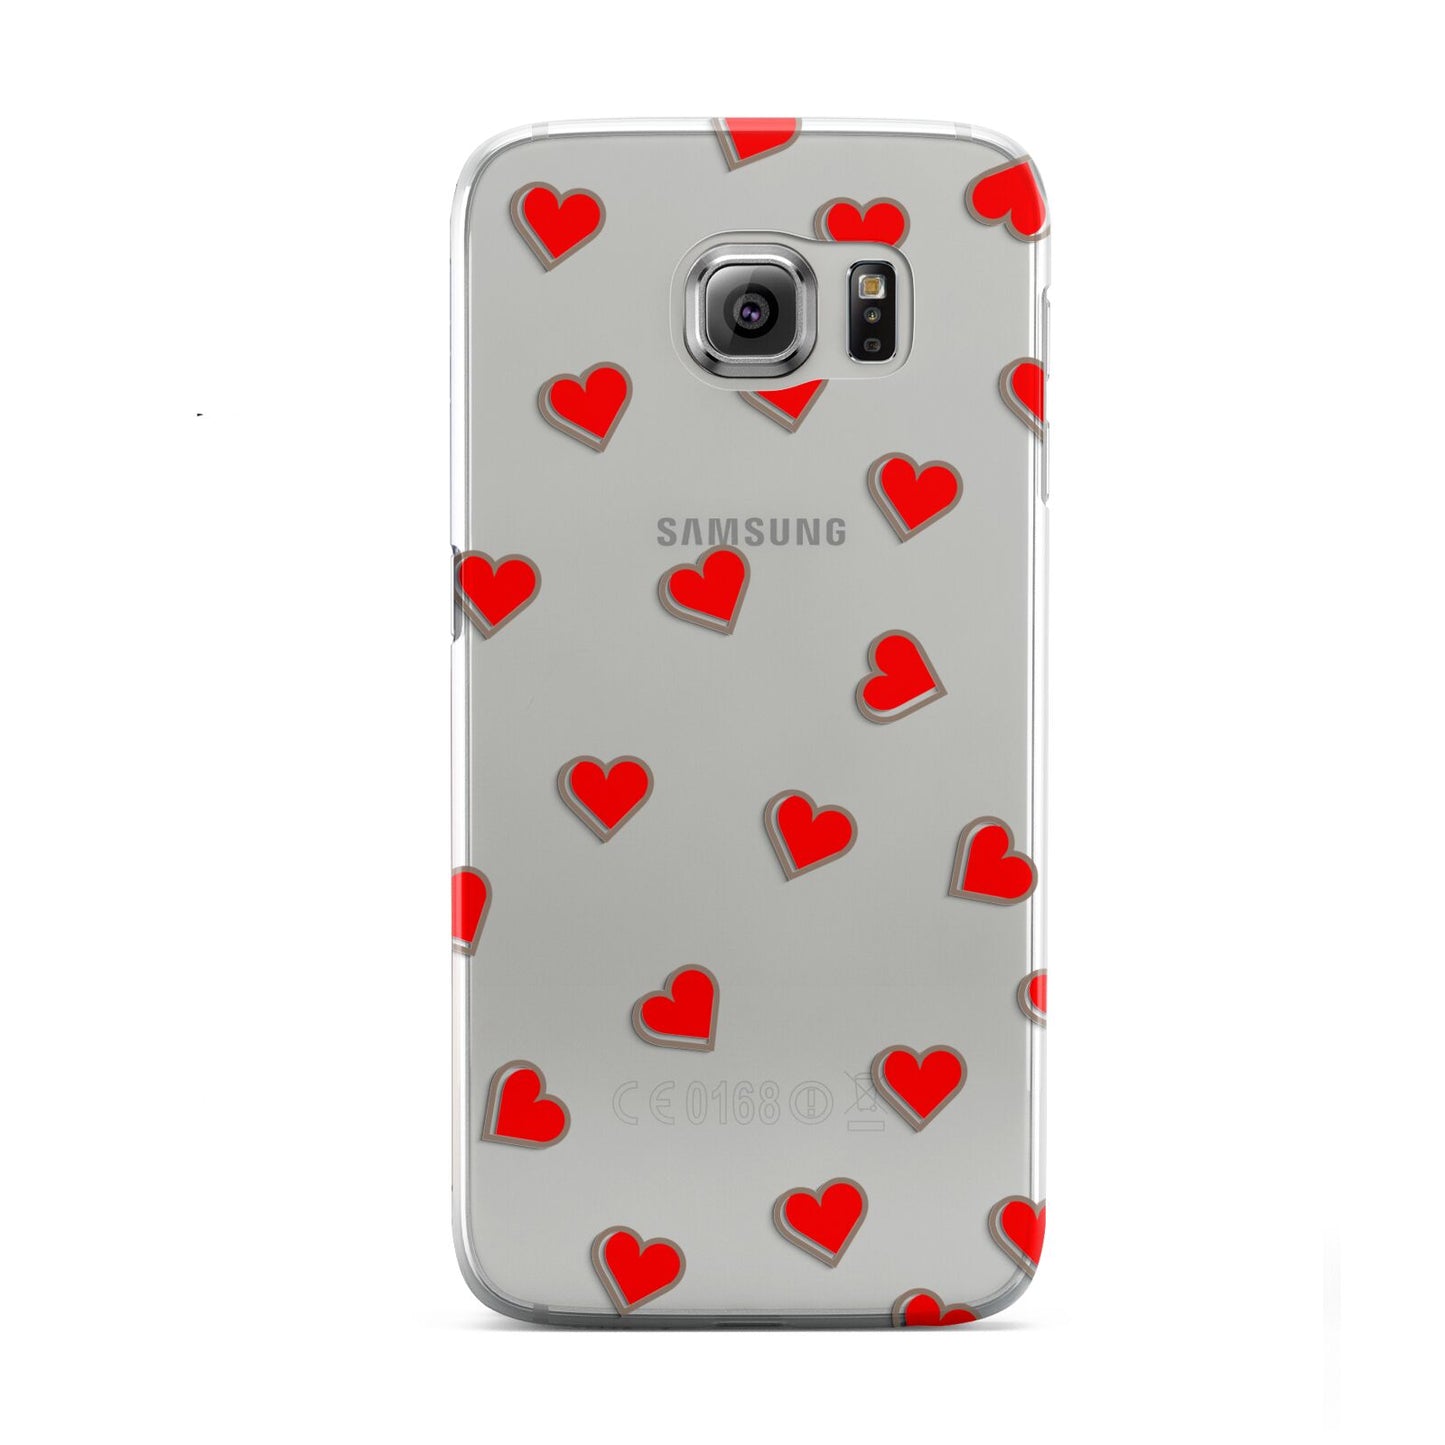 Cute Red Hearts Samsung Galaxy S6 Case